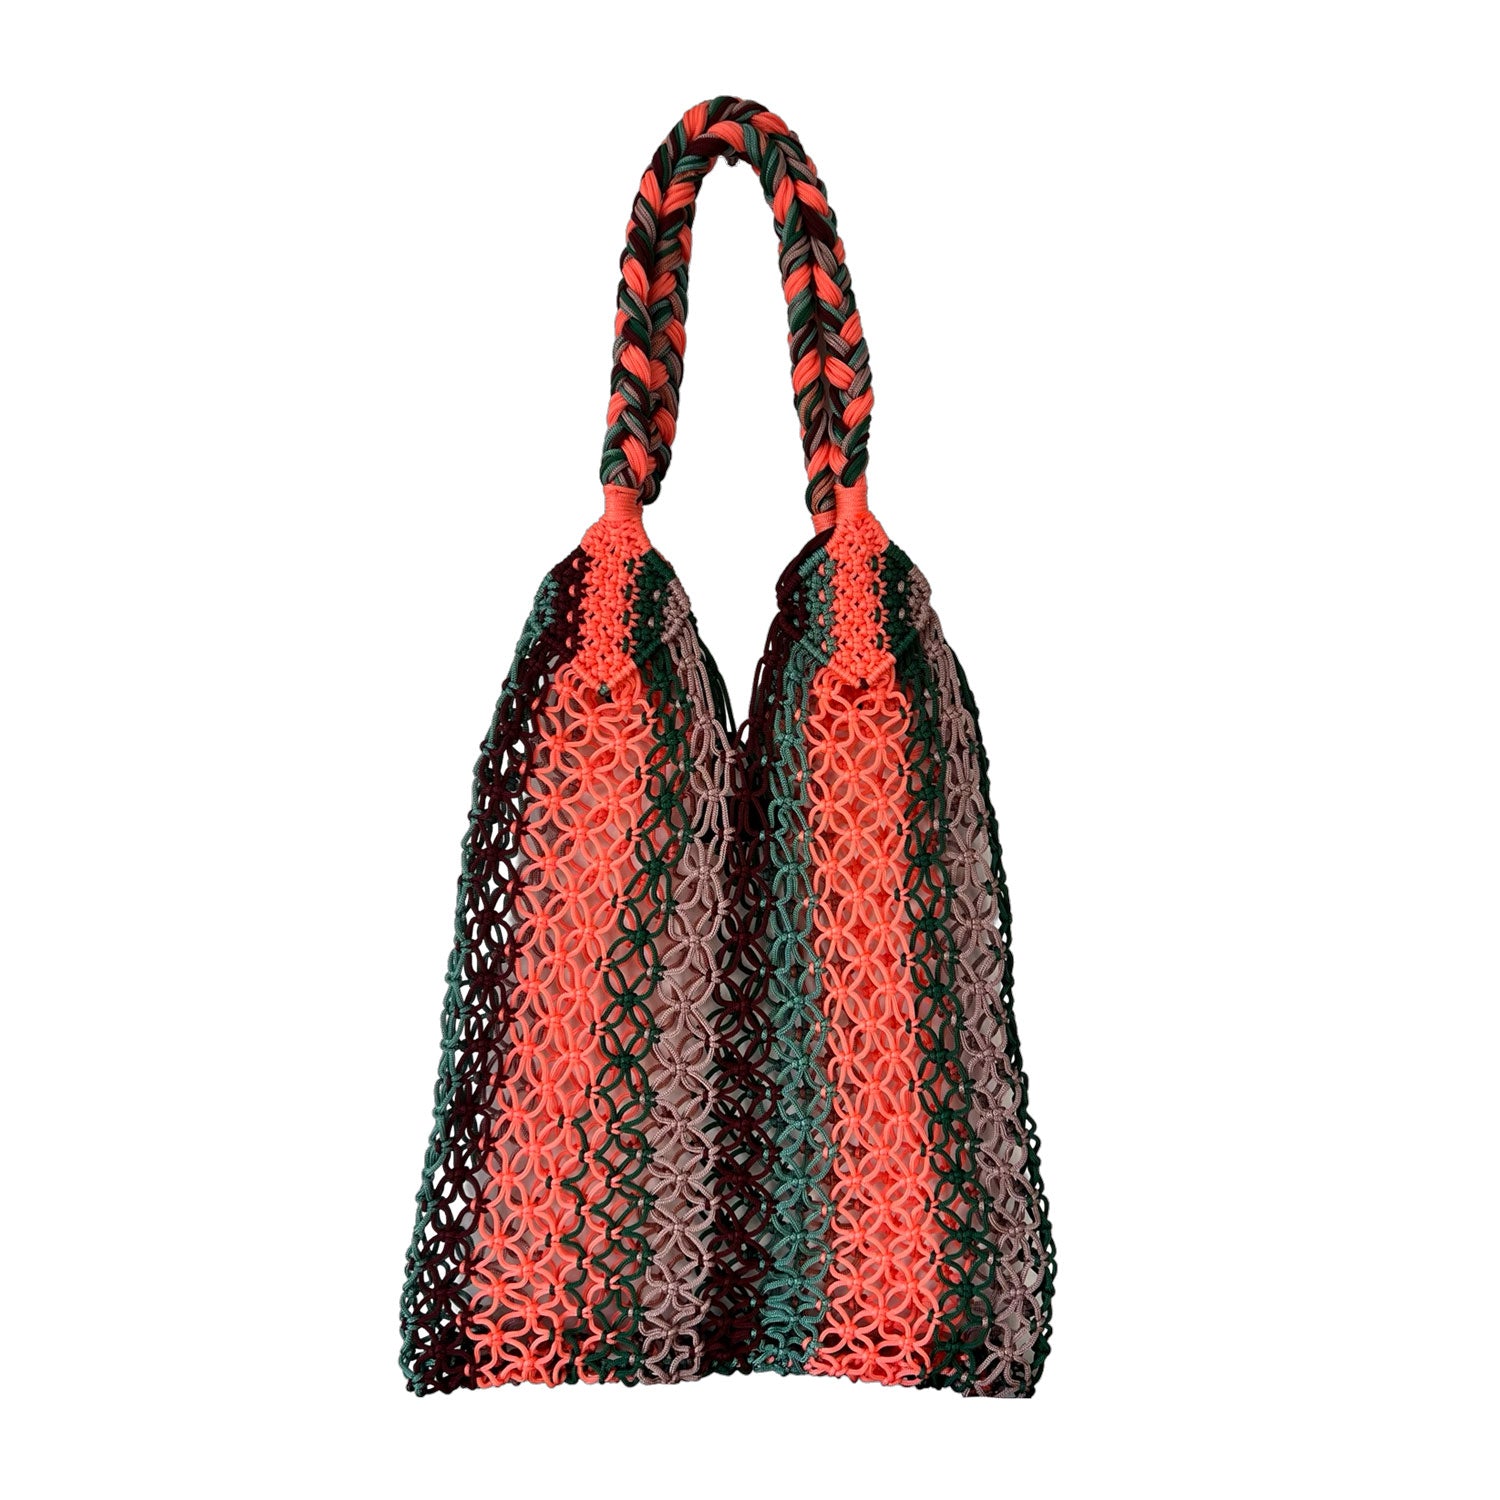 Braided Crochet Handbag in Pink & Turquoise